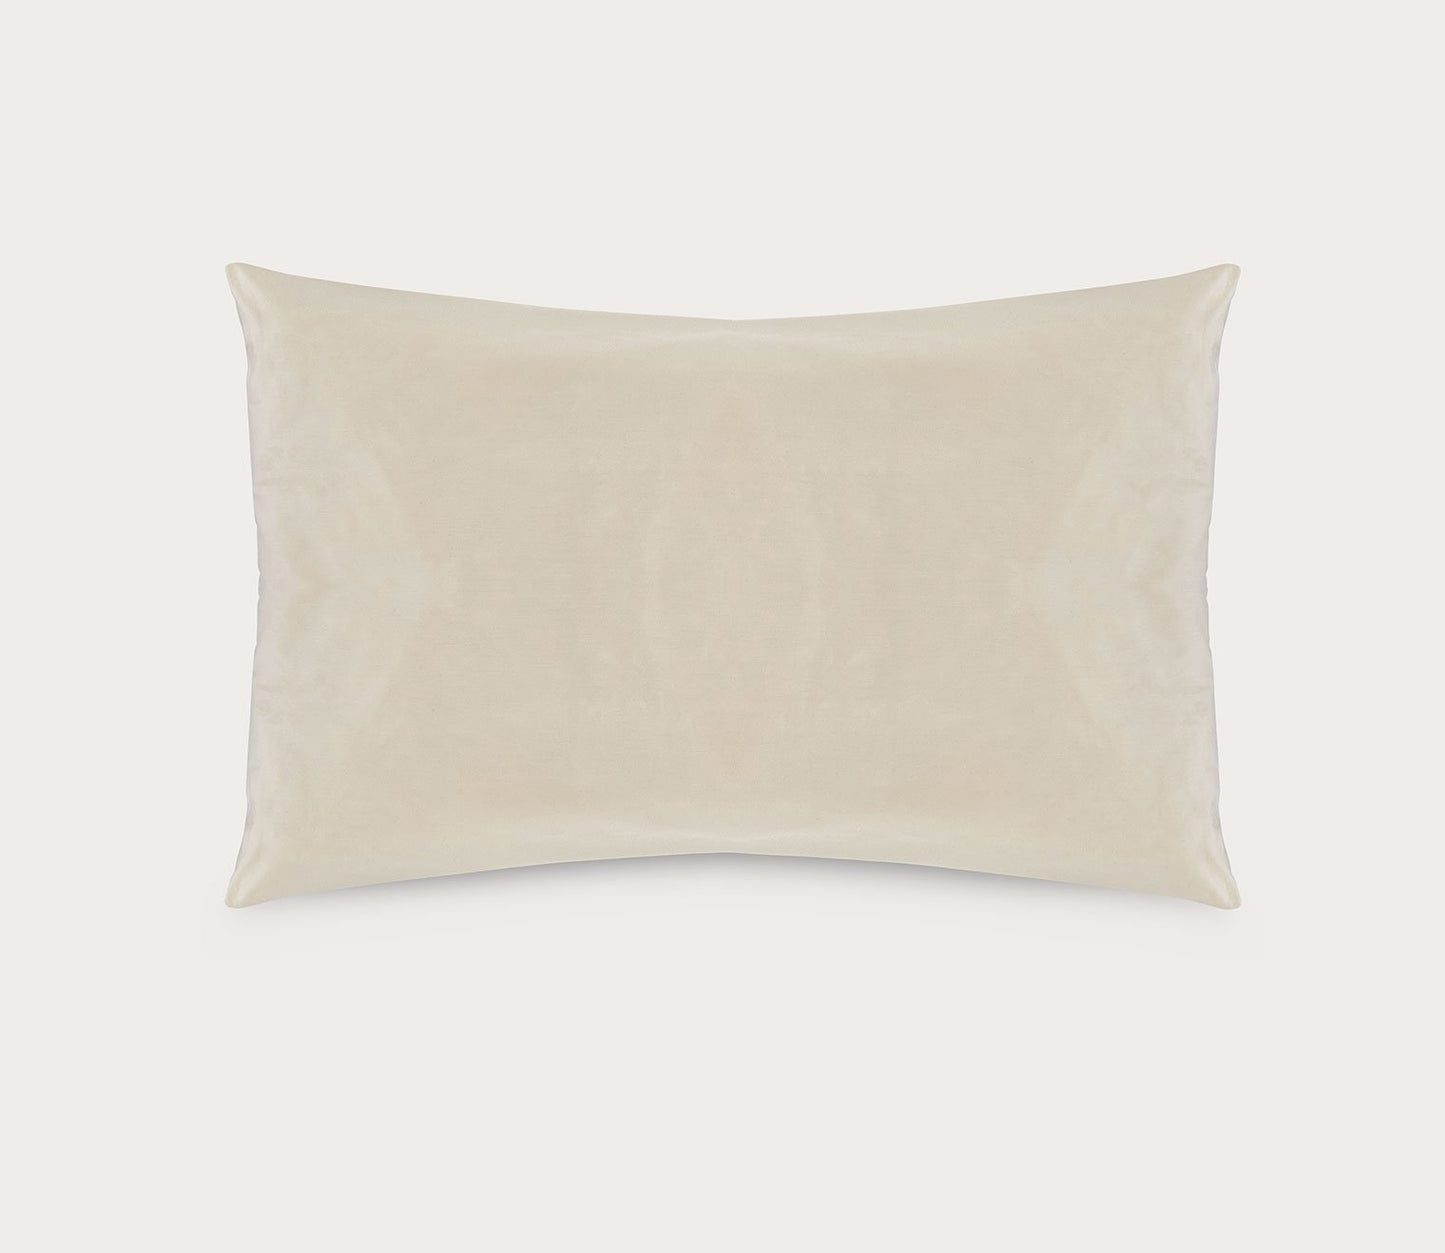 myWool® Natural Wool Pillow by Sleep & Beyond